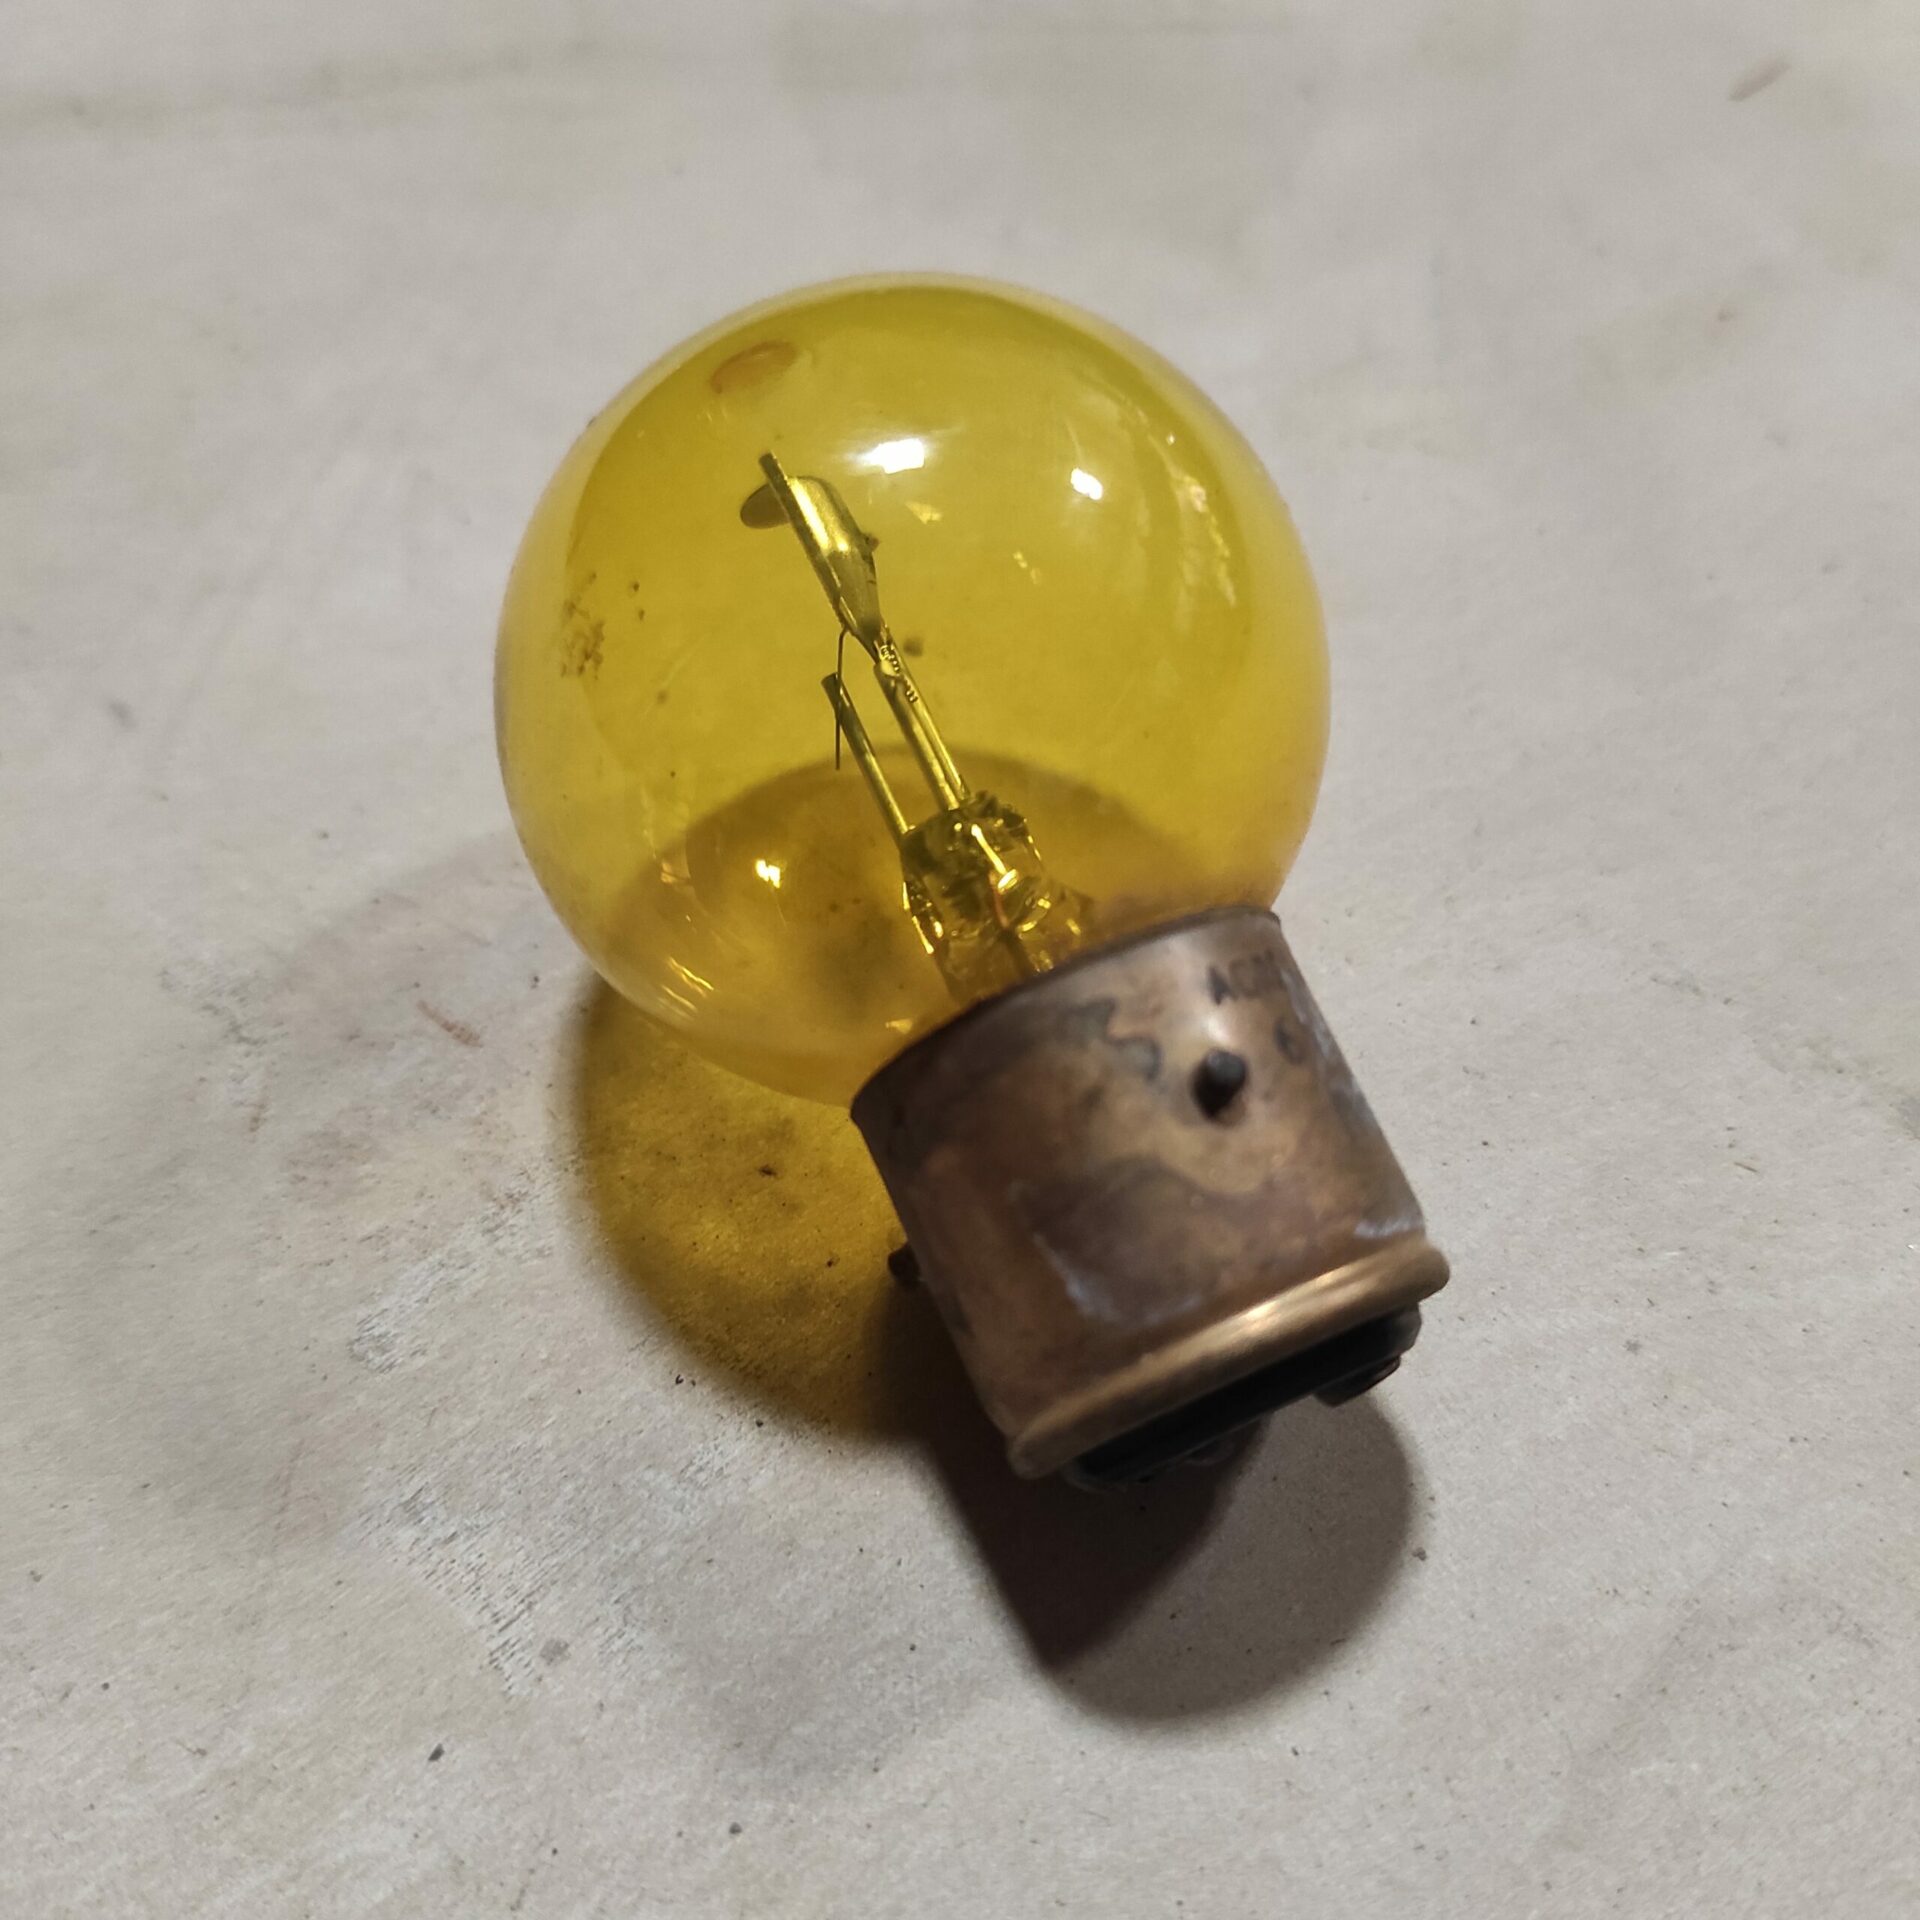 Ampoule jaune 12V code phare 40W testée - Jabla 2CV